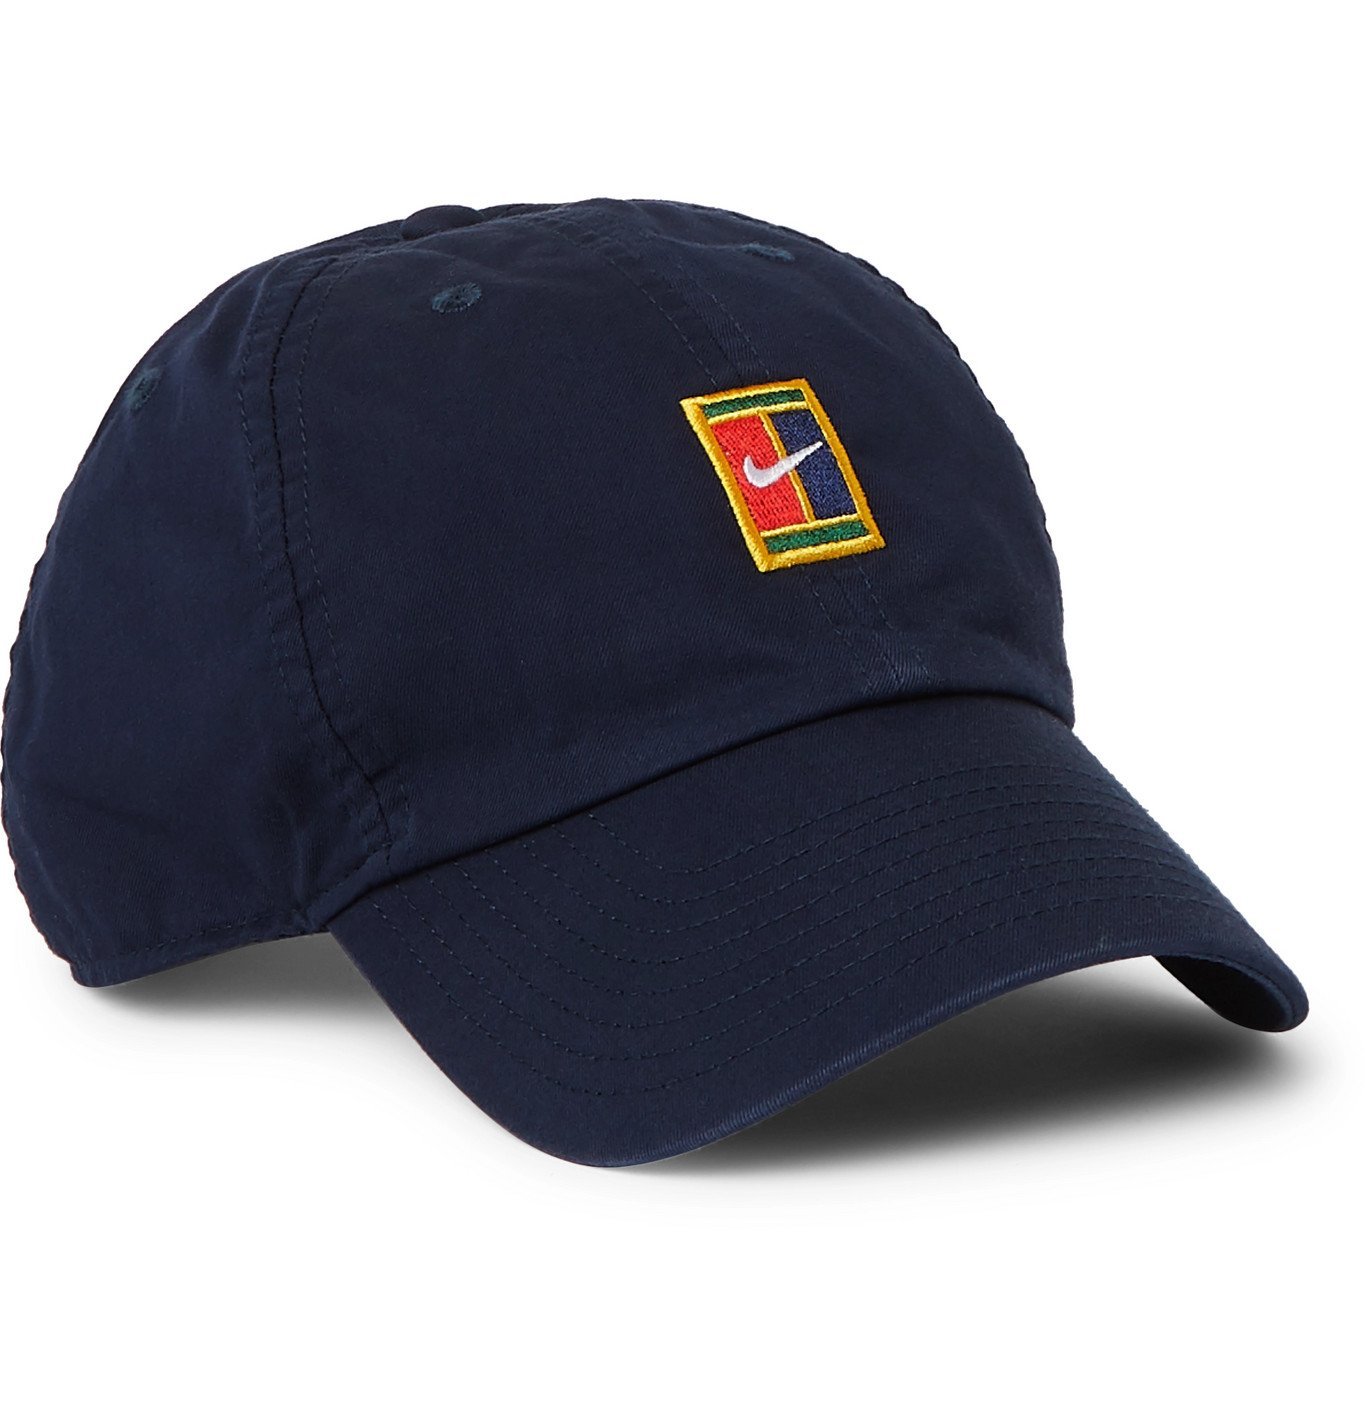 Buy > nike court tennis hat > in stock